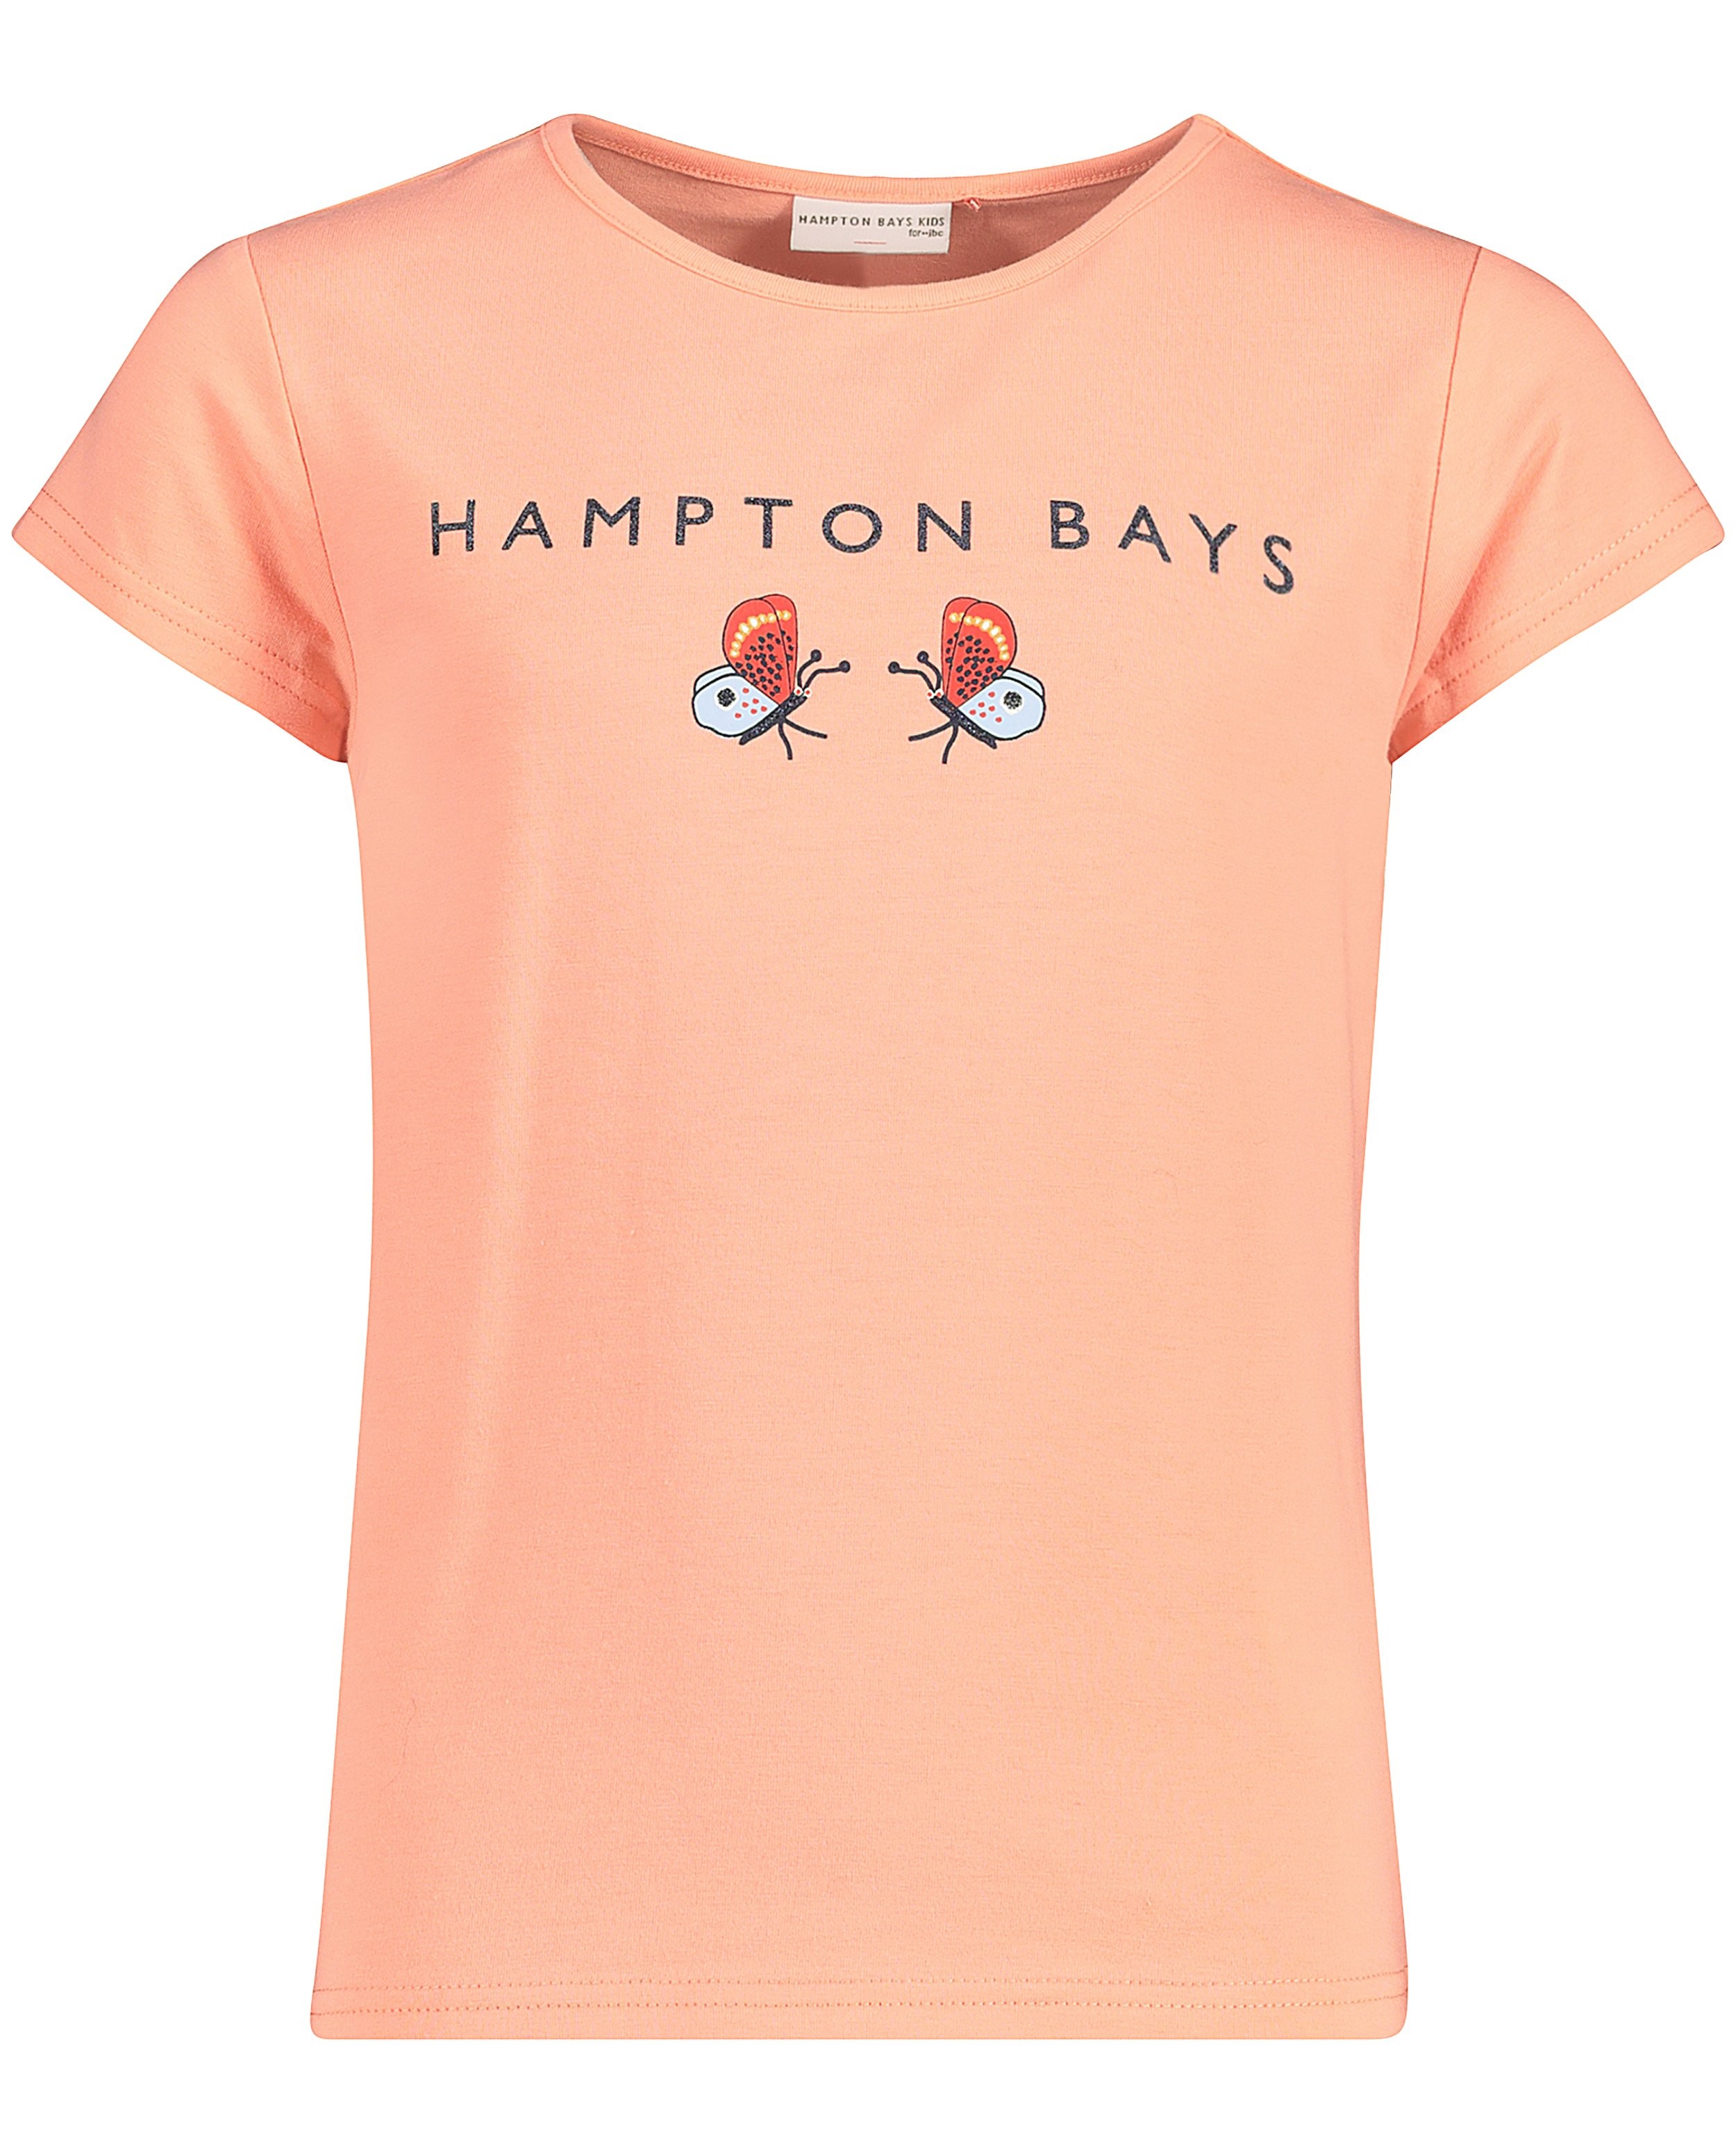 T-shirts - T-shirt met print + opschrift Hampton Bays